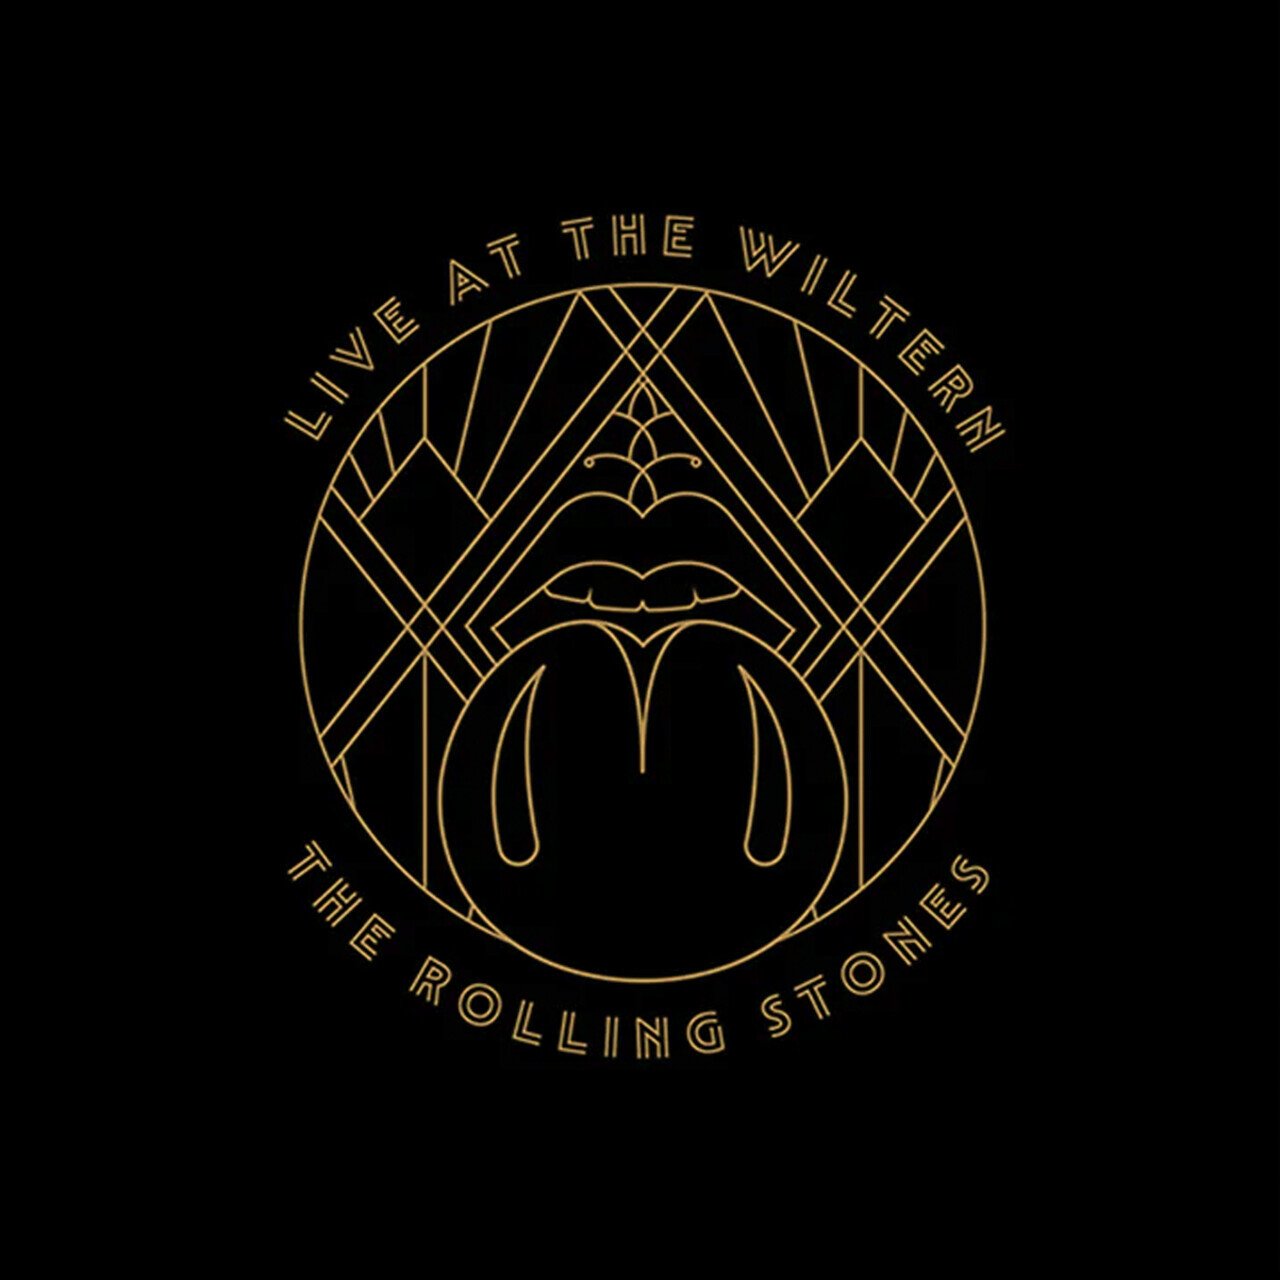 Рок Universal (Aus) Rolling Stones, The - Live At The Wiltern (Black Vinyl 3LP) wishbone ash live in tokyo 1 cd